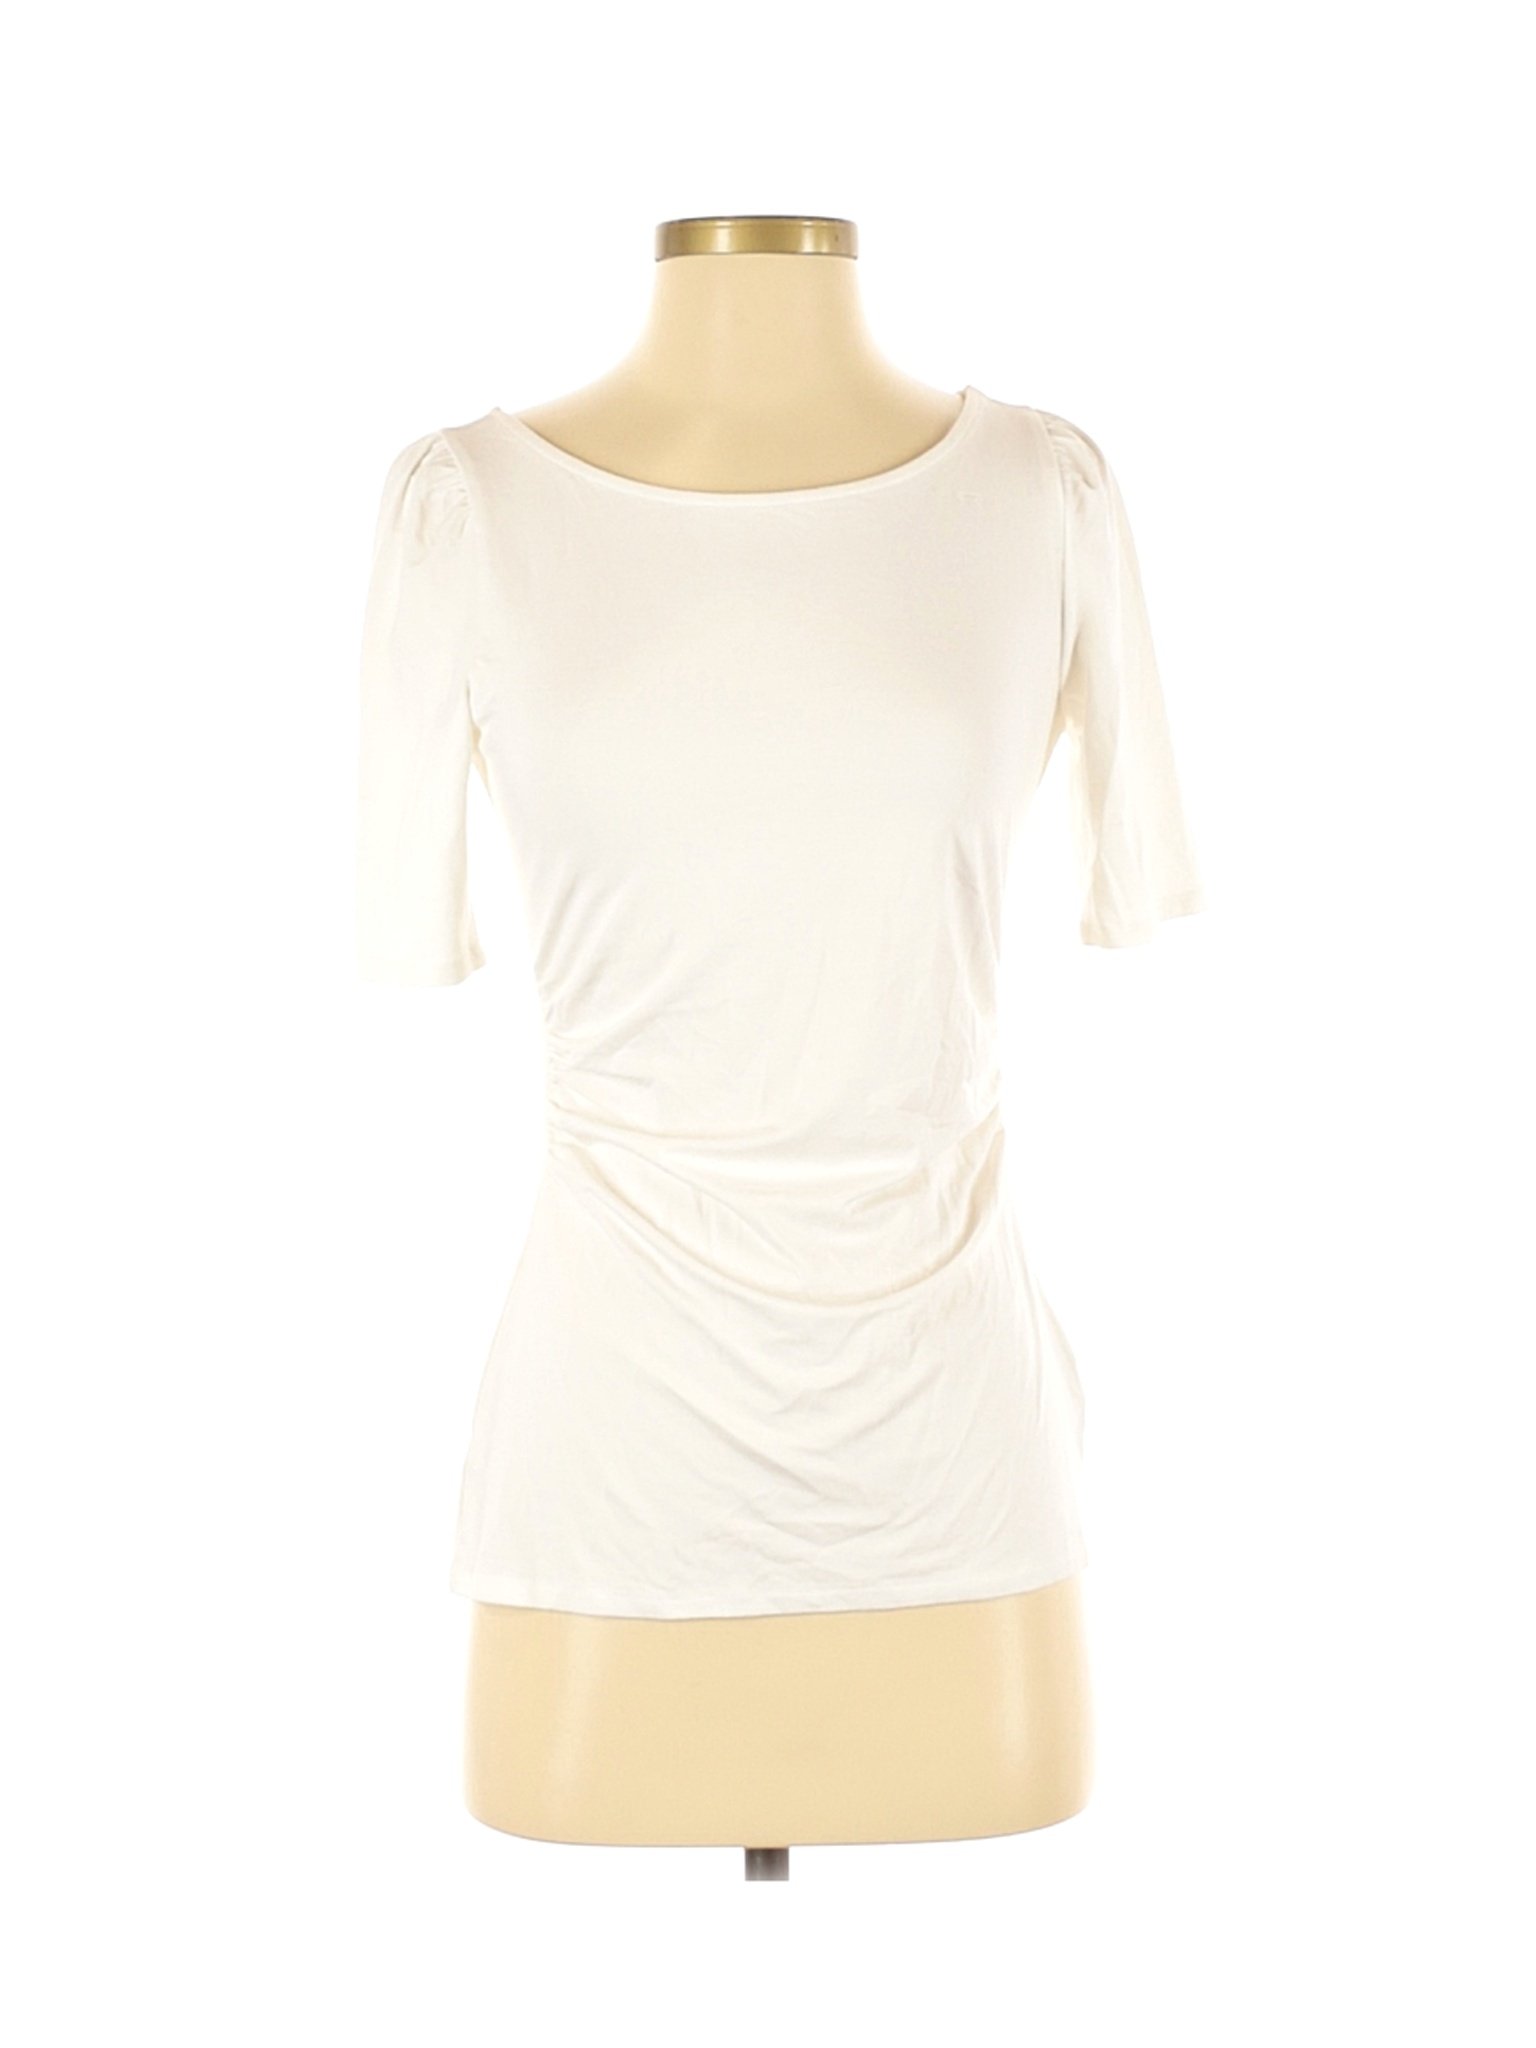 NWT White House Black Market Women Ivory Short Sleeve T-Shirt XS | eBay